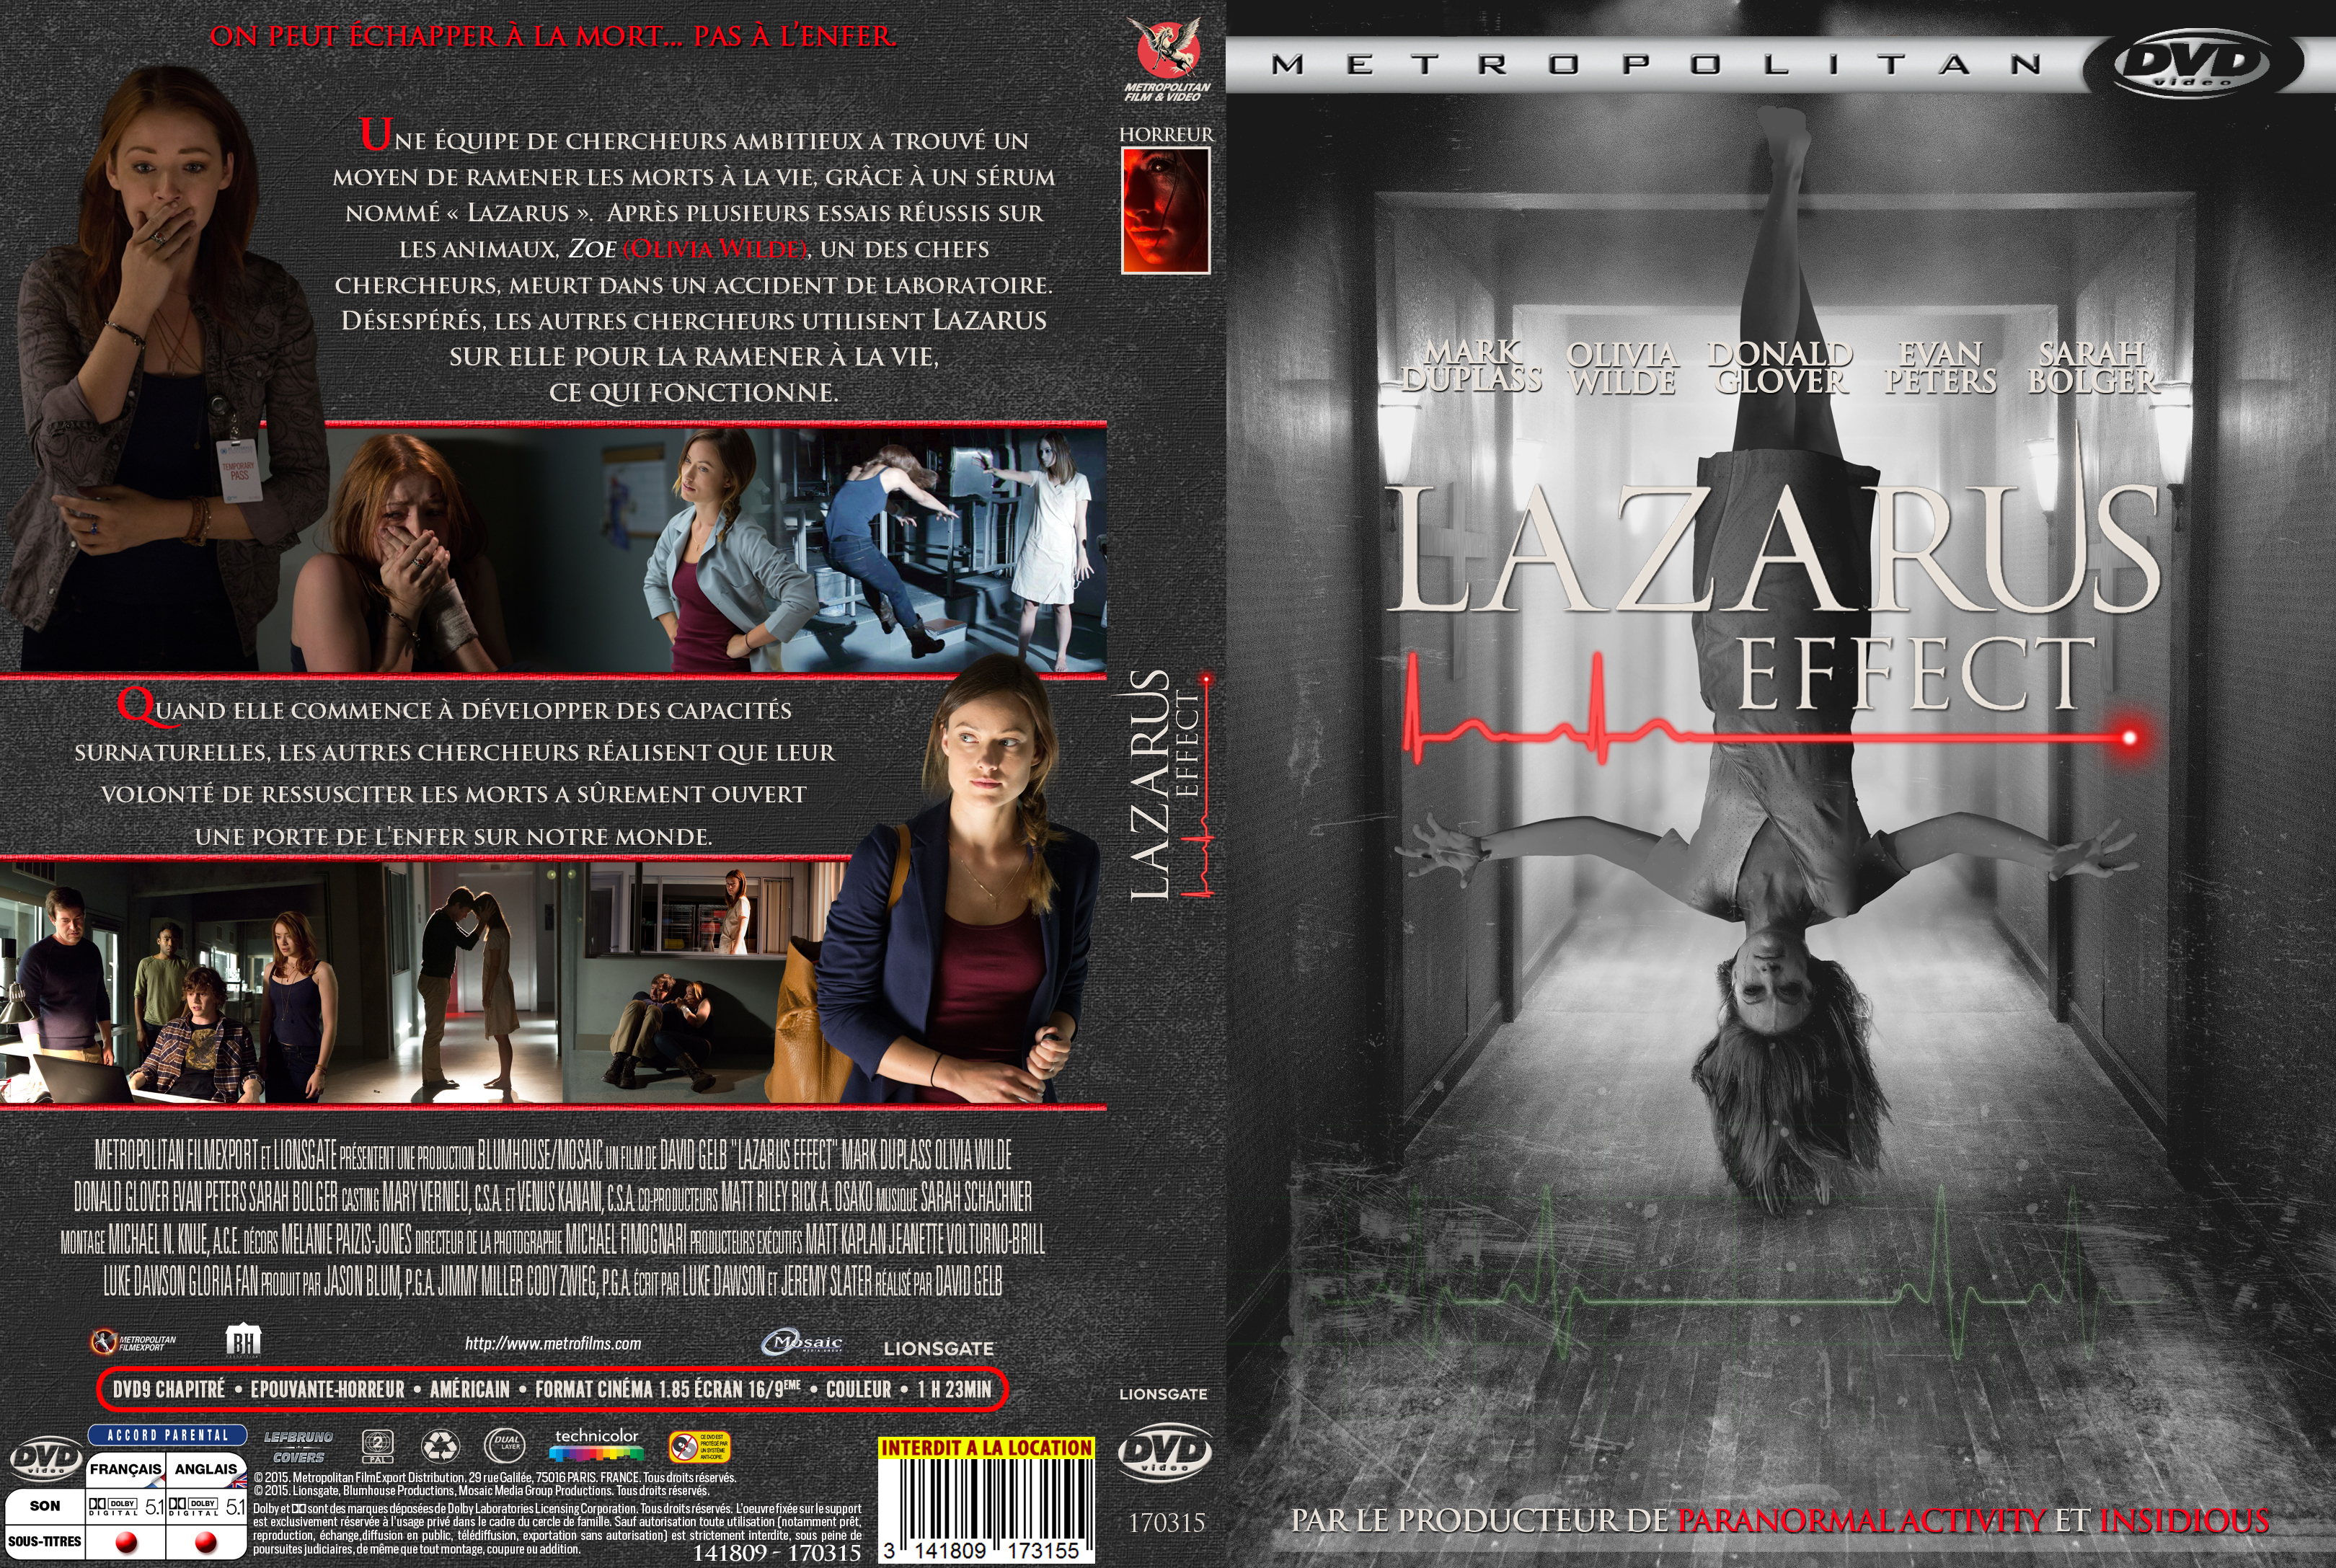 Jaquette DVD Lazarus Effect custom